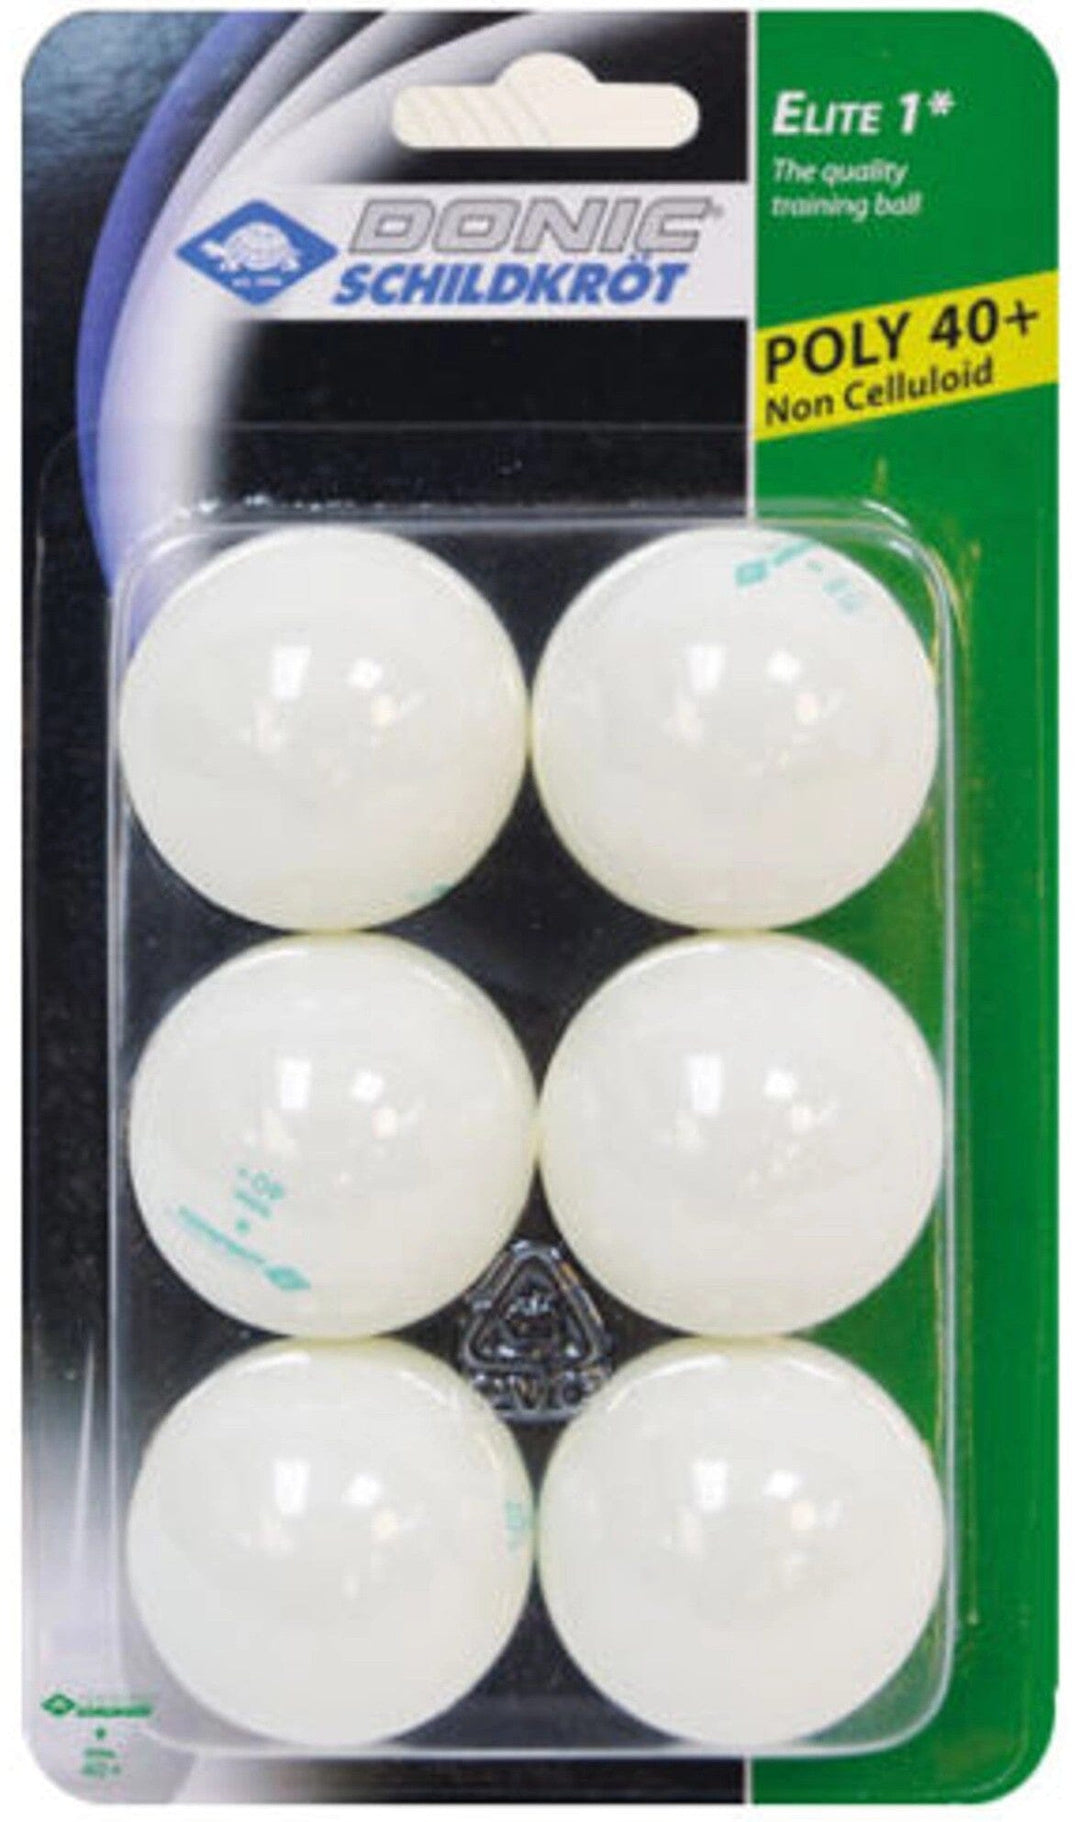 Donic-Schildkrot 1-STAR Elite 40+ Table Tennis Balls (pack of 6) Ping-pong balls Donic 